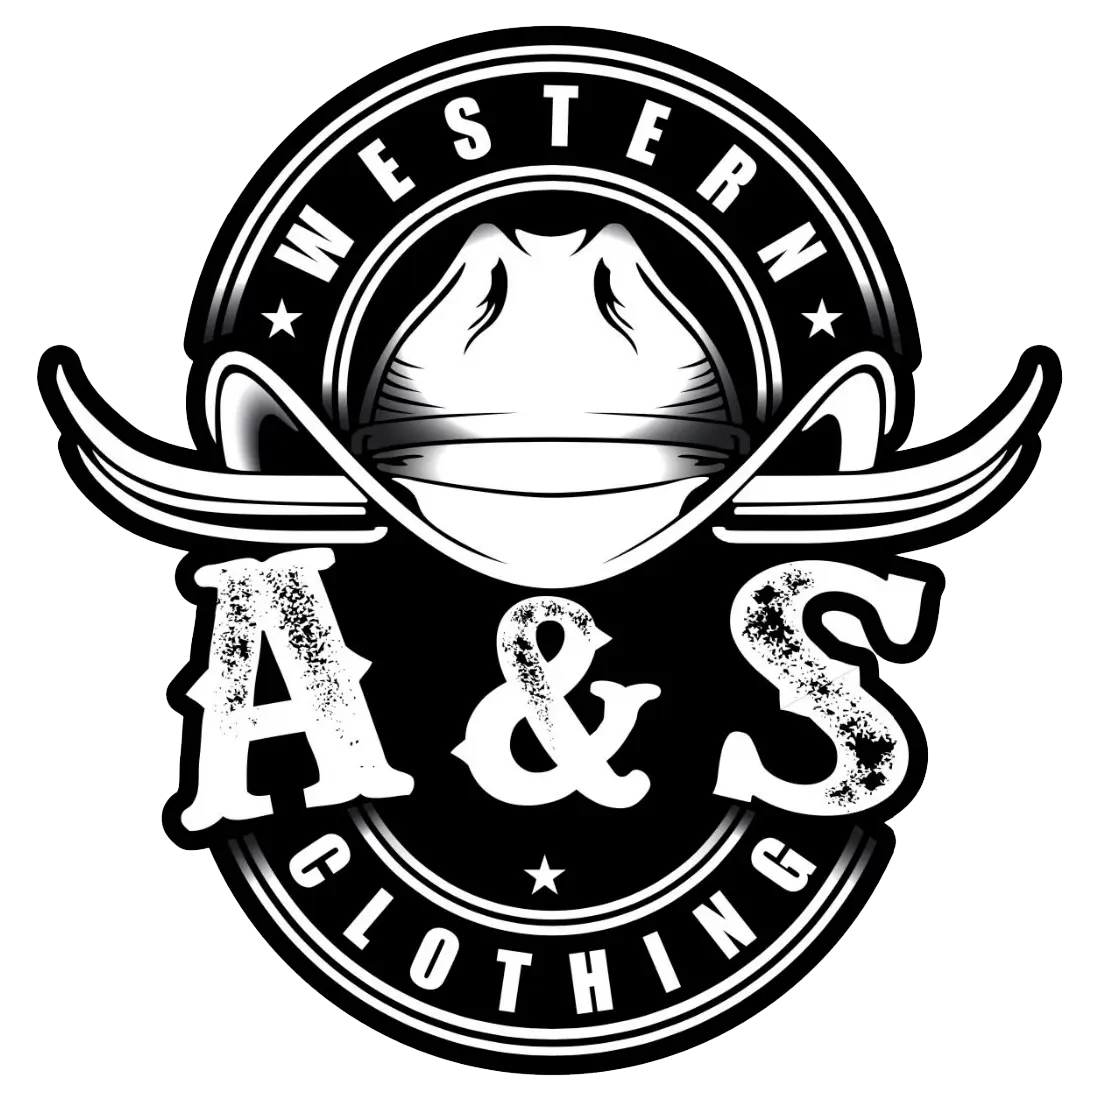 A & S Western Clothing logo